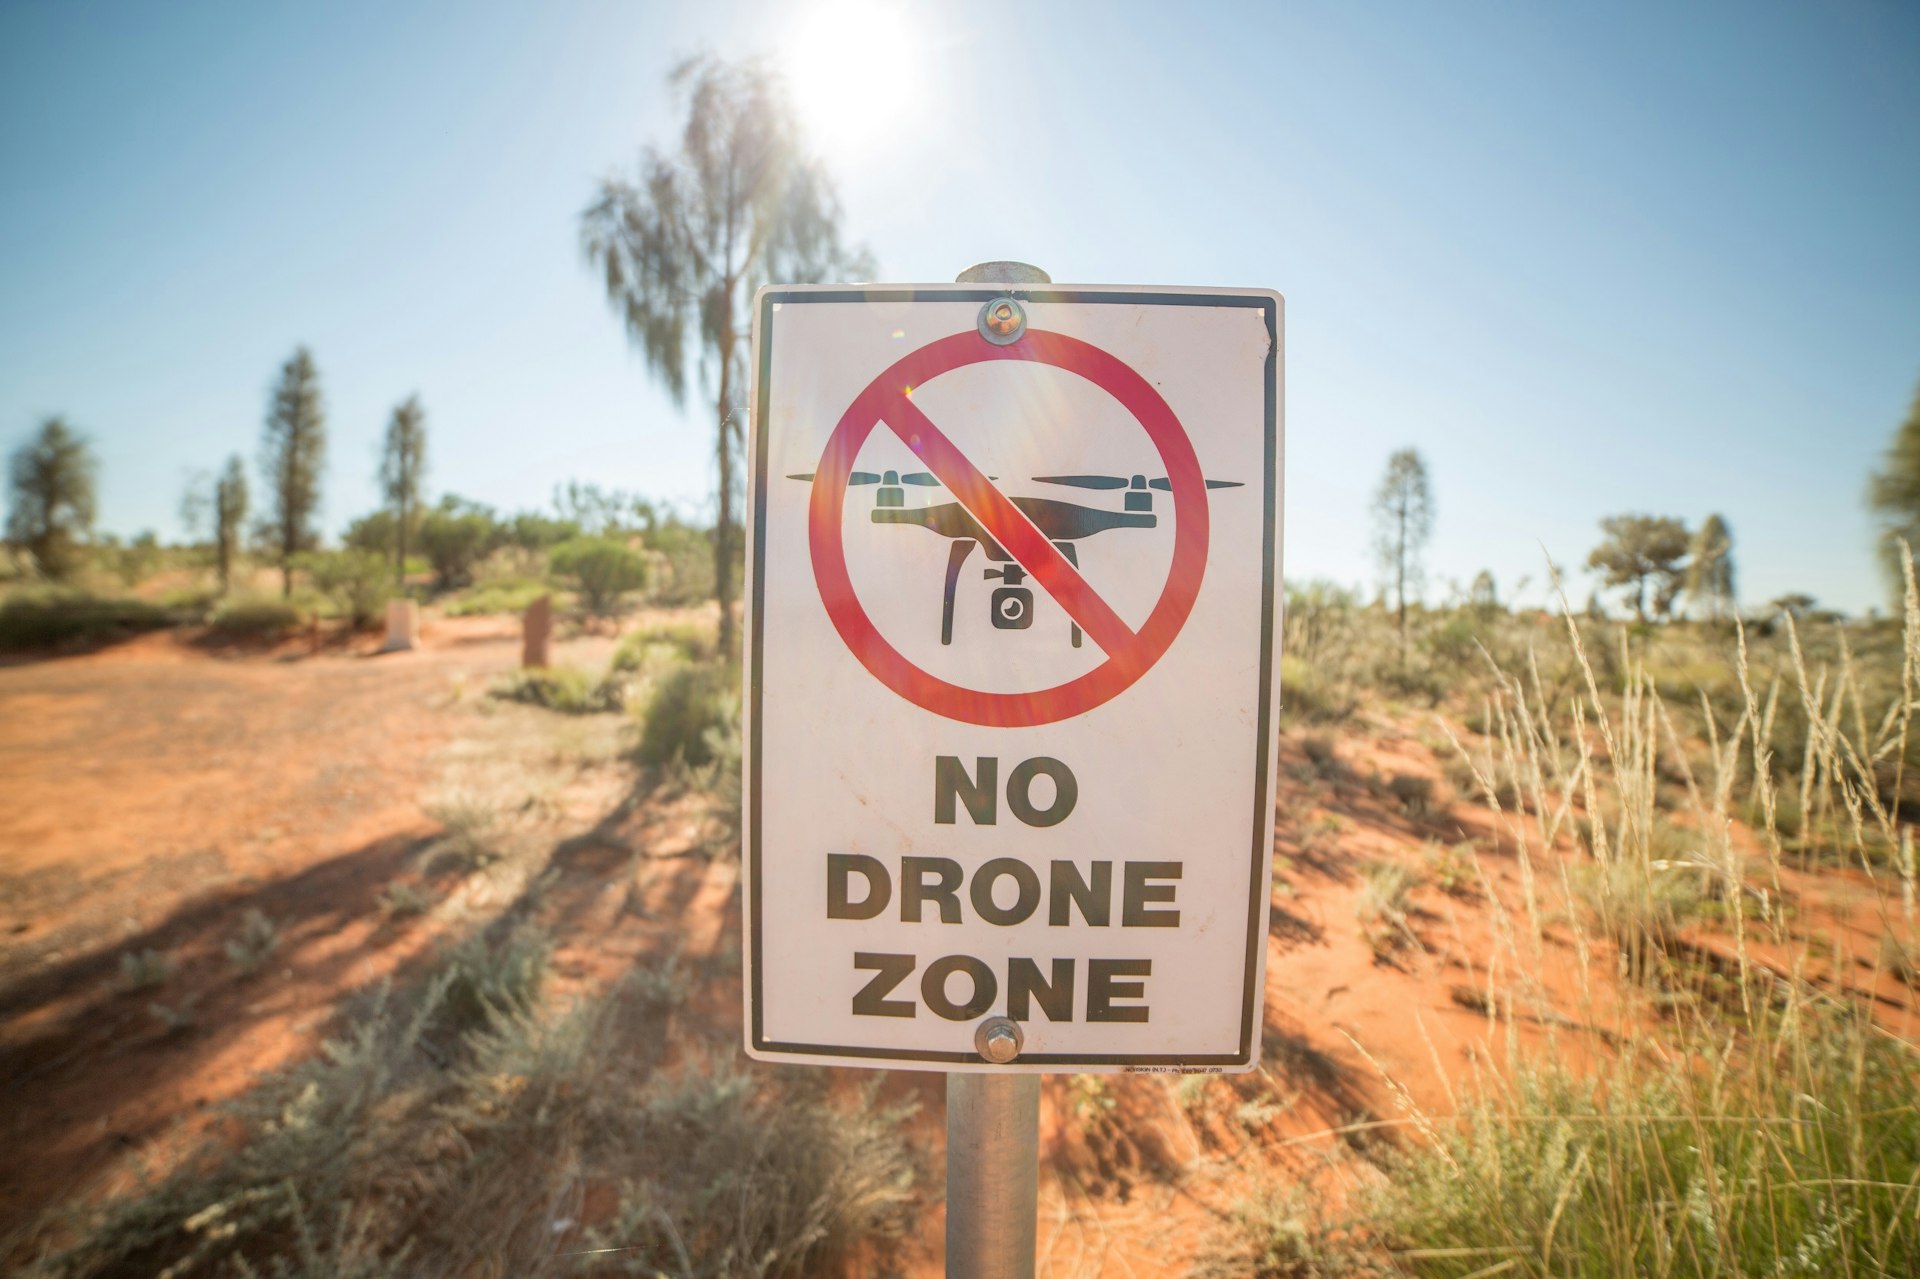 'No drone zone' sign in Australia's Outback